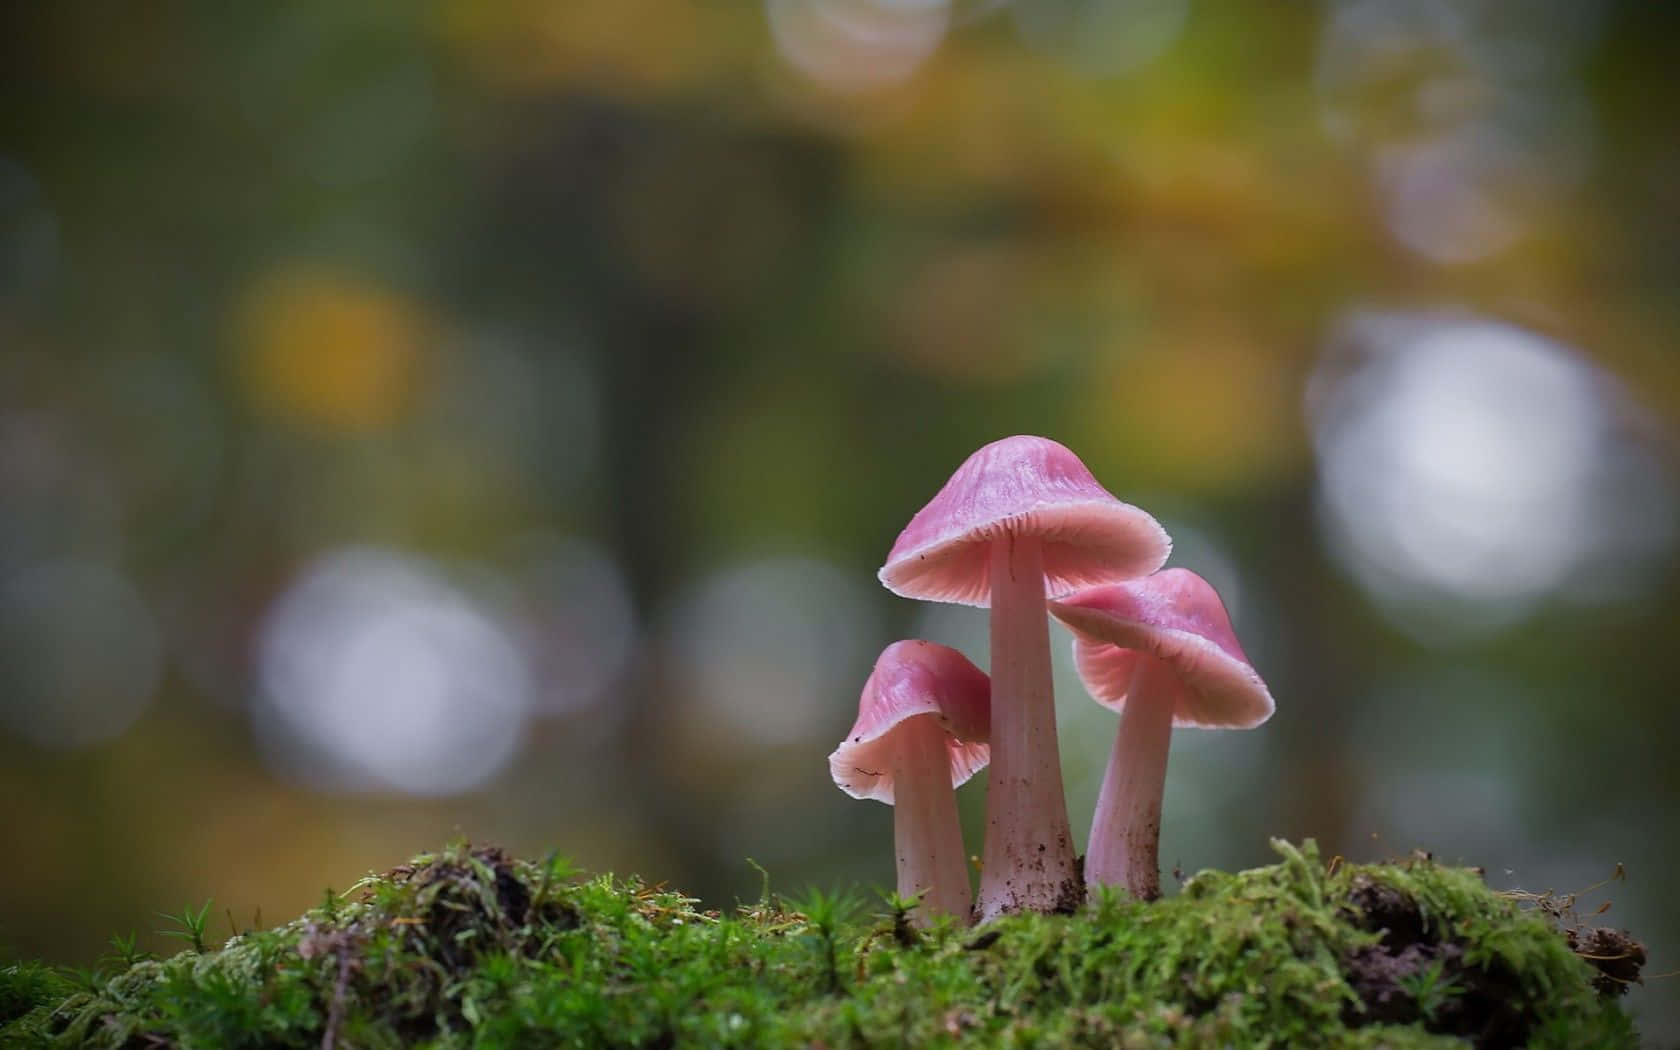 A Vivid, Colorful Display of Mushrooms